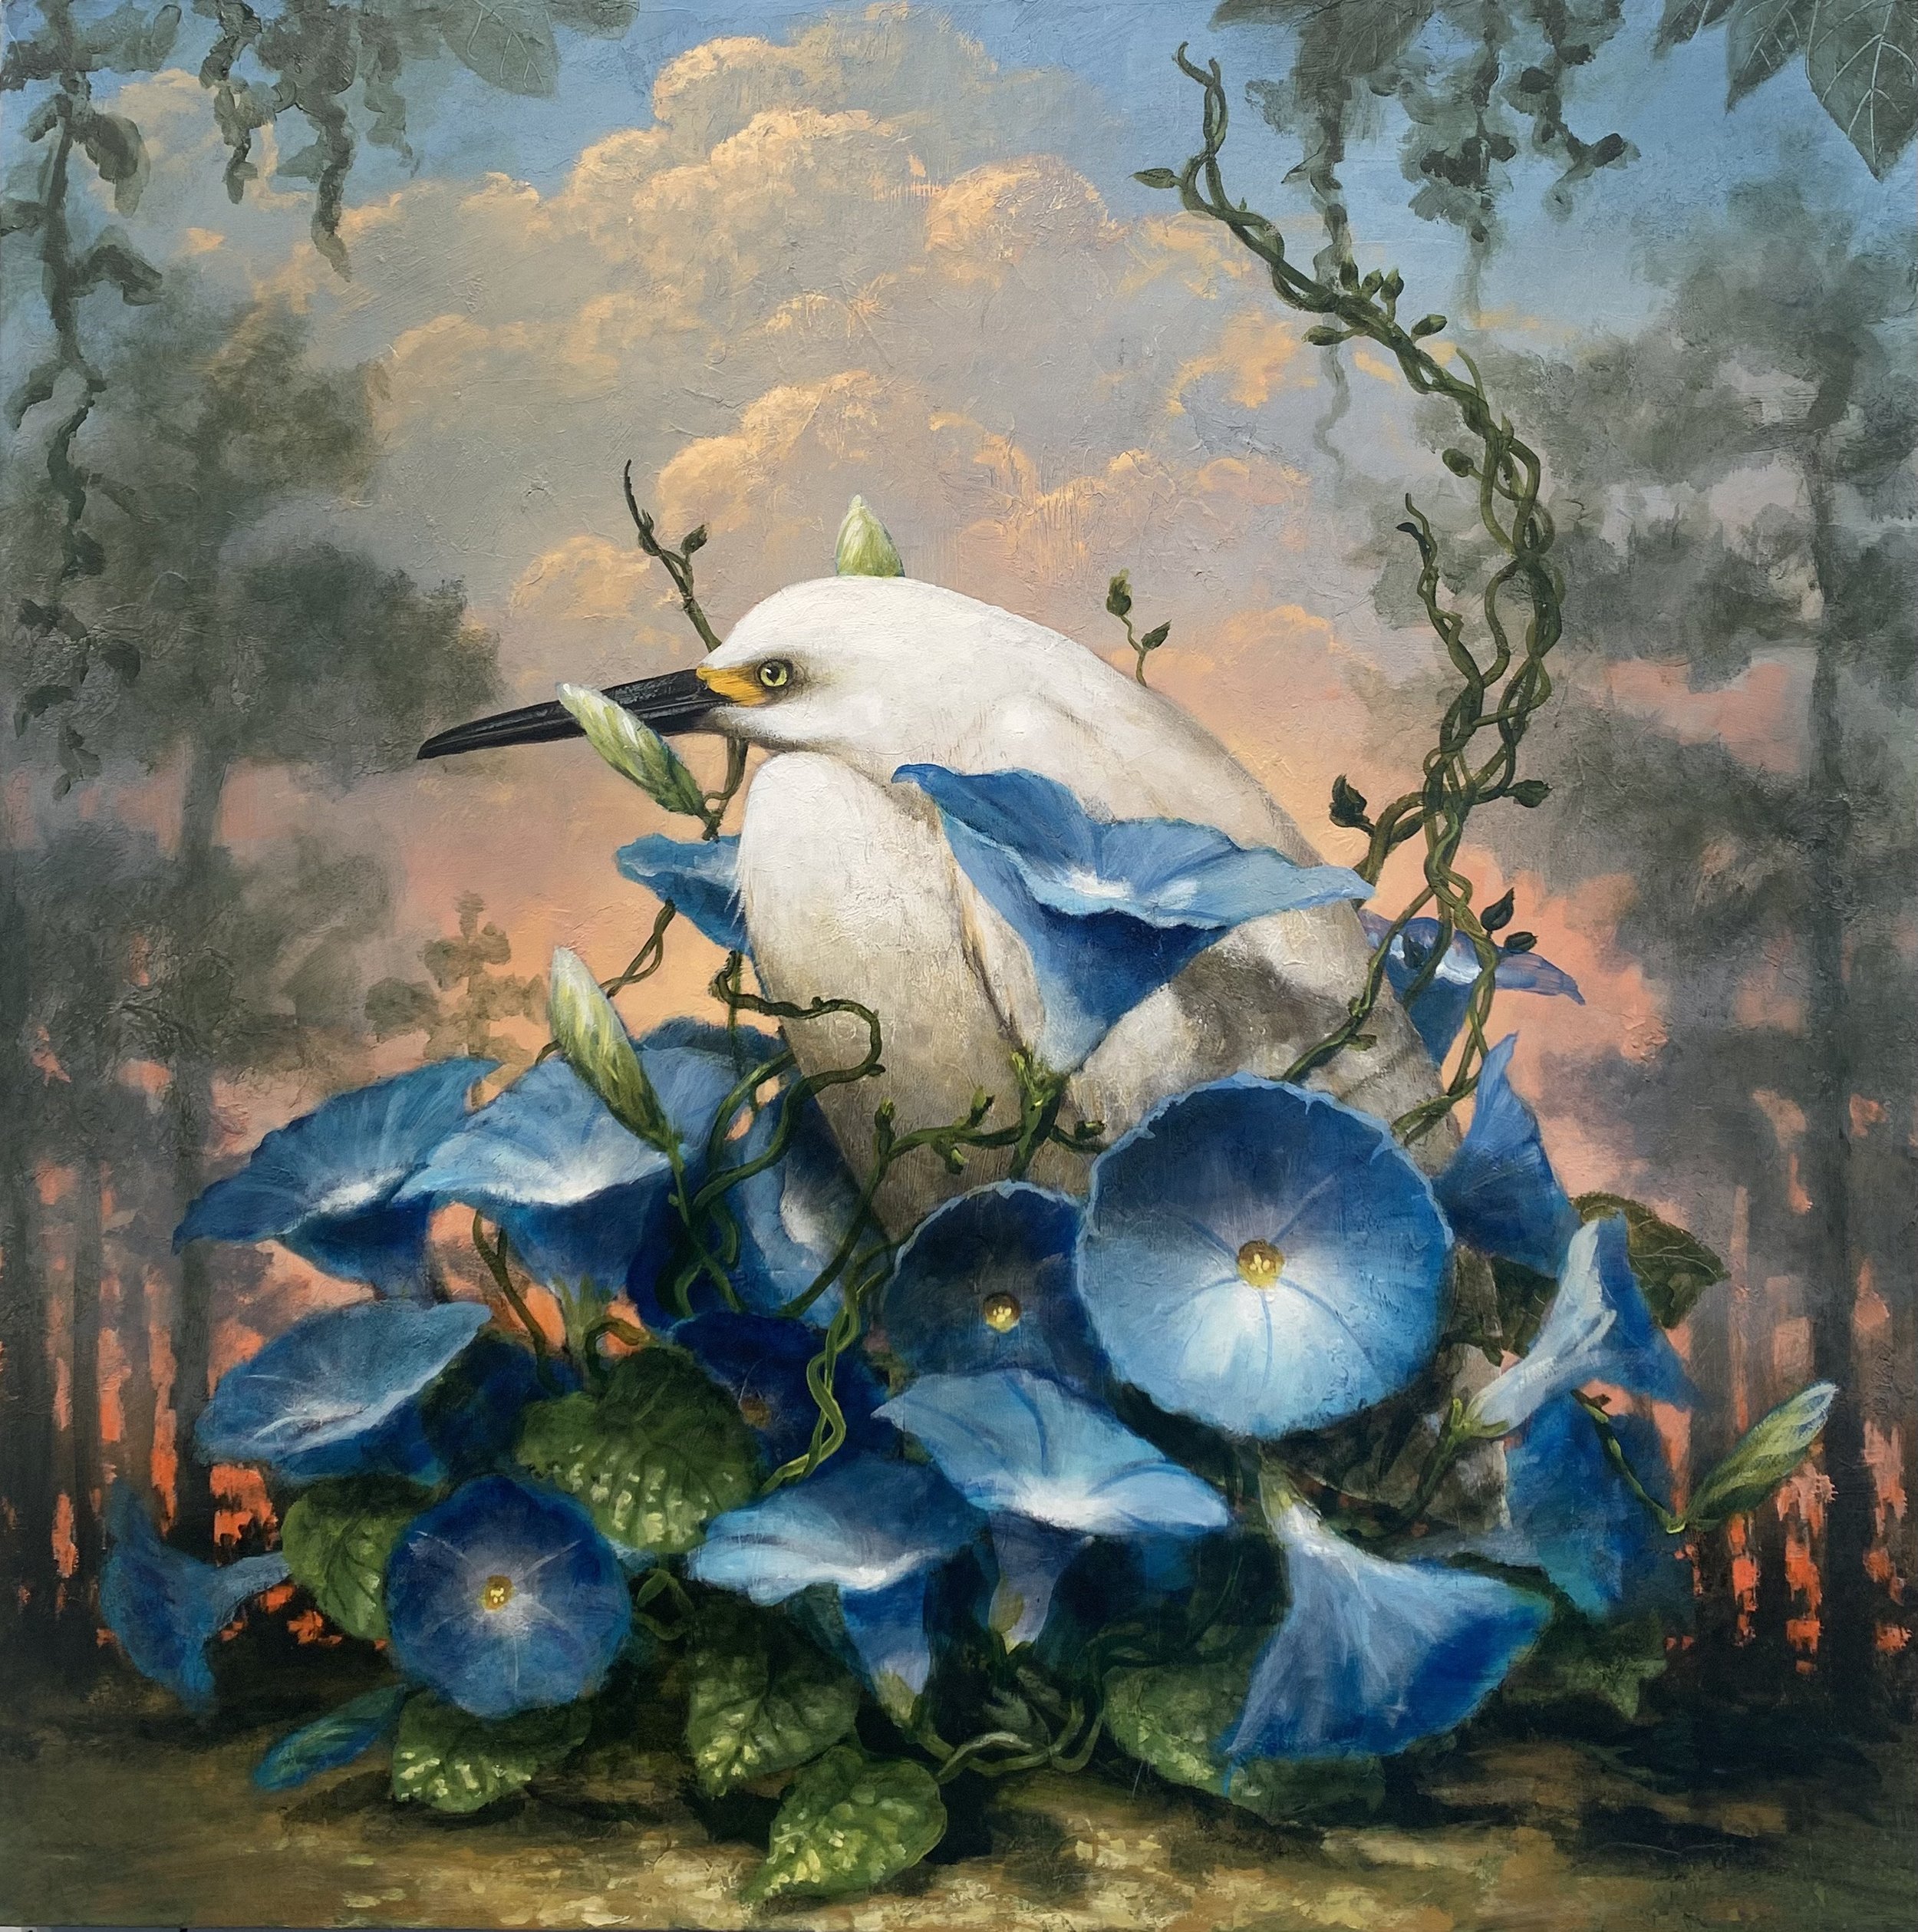 Snowy Egret in Hiding, 36"x36", acrylic on canvas